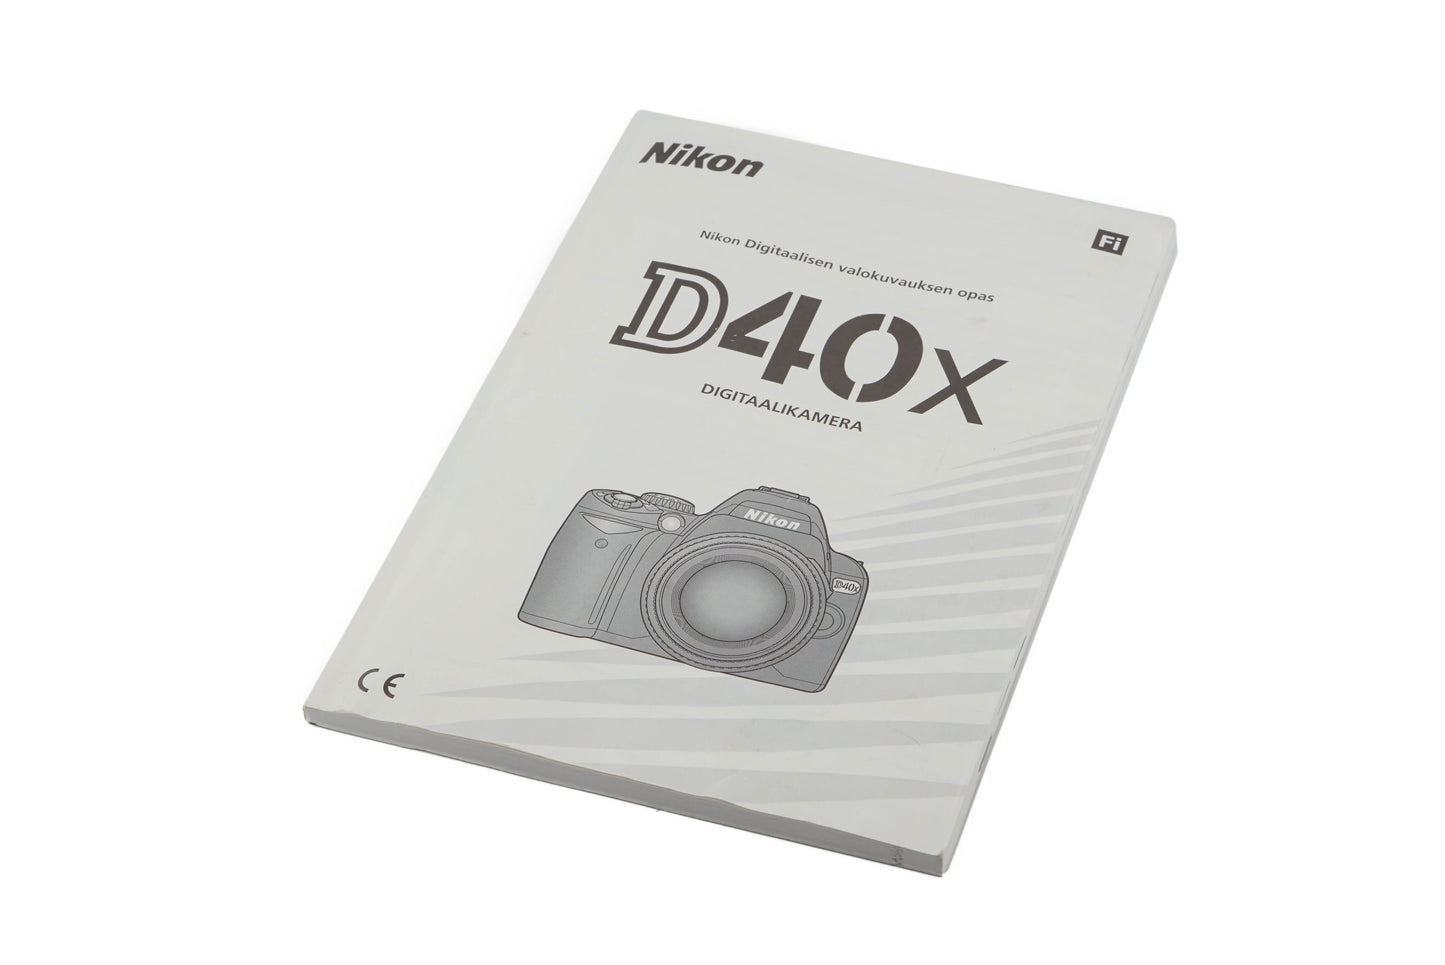 Nikon D40x Instructions